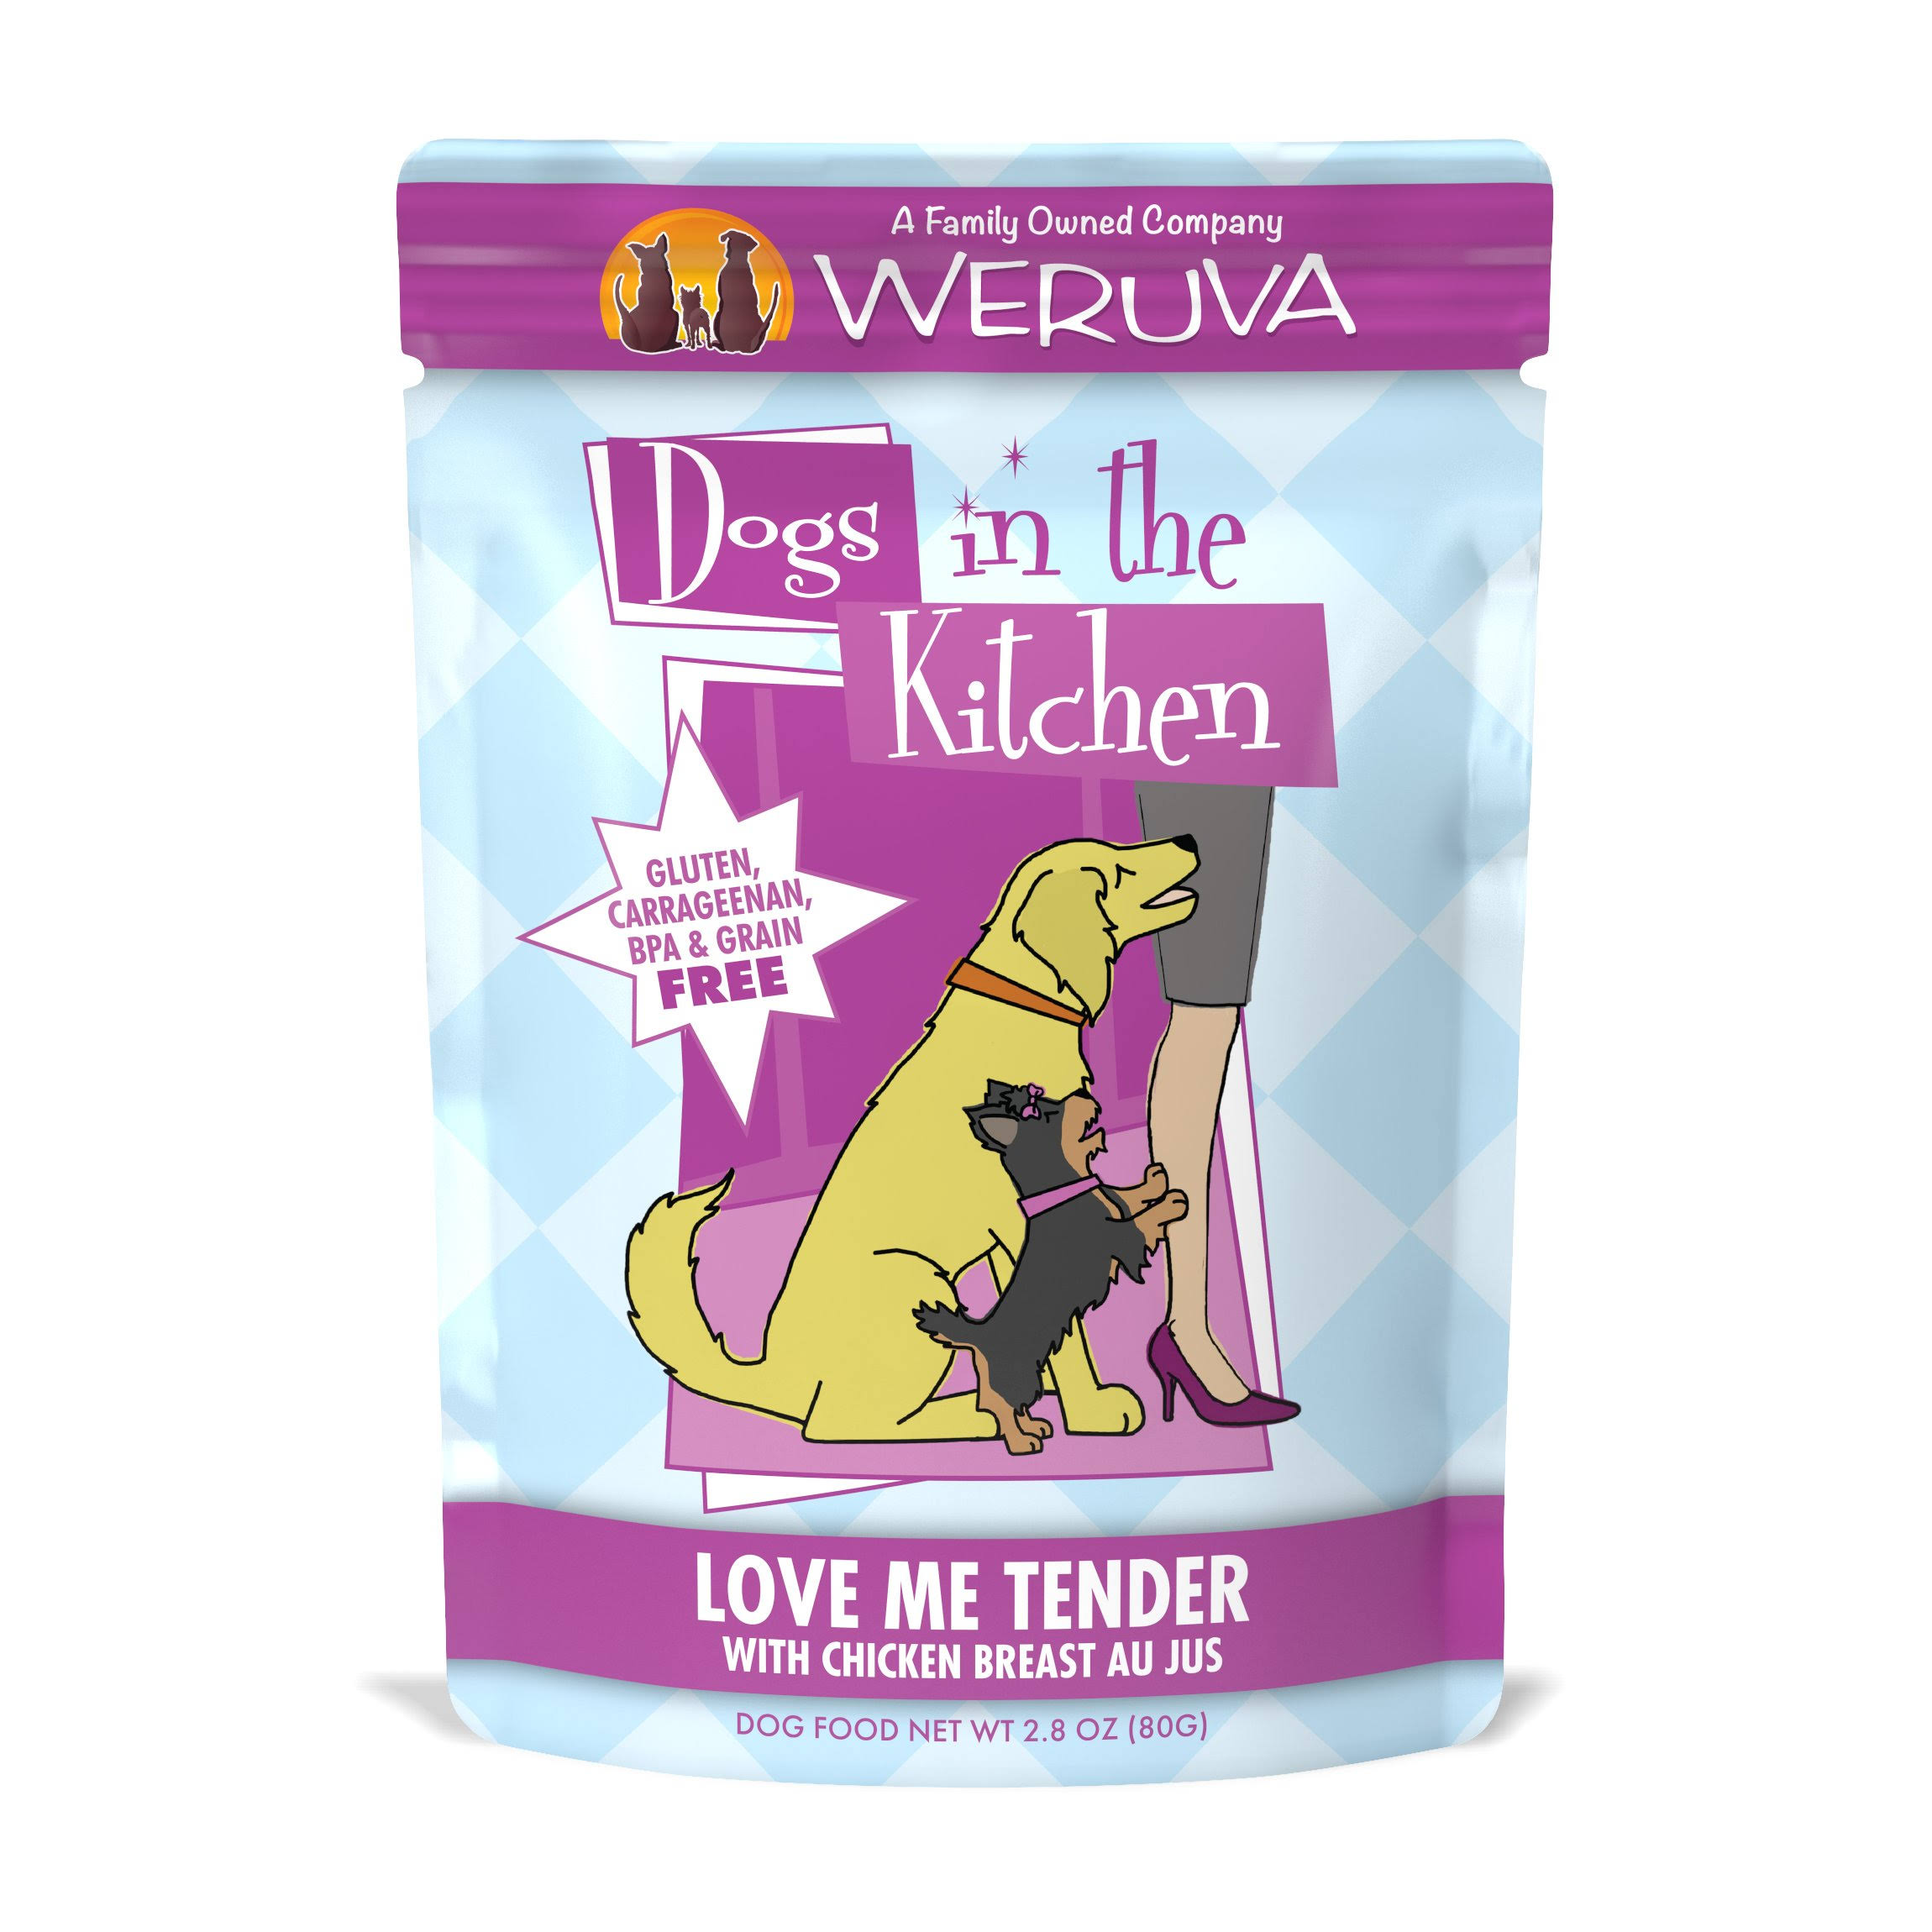 Weruva Dogs in the Kitchen Love Me Tender Dog Food - with Chicken Breast Au Jus, 2.8oz